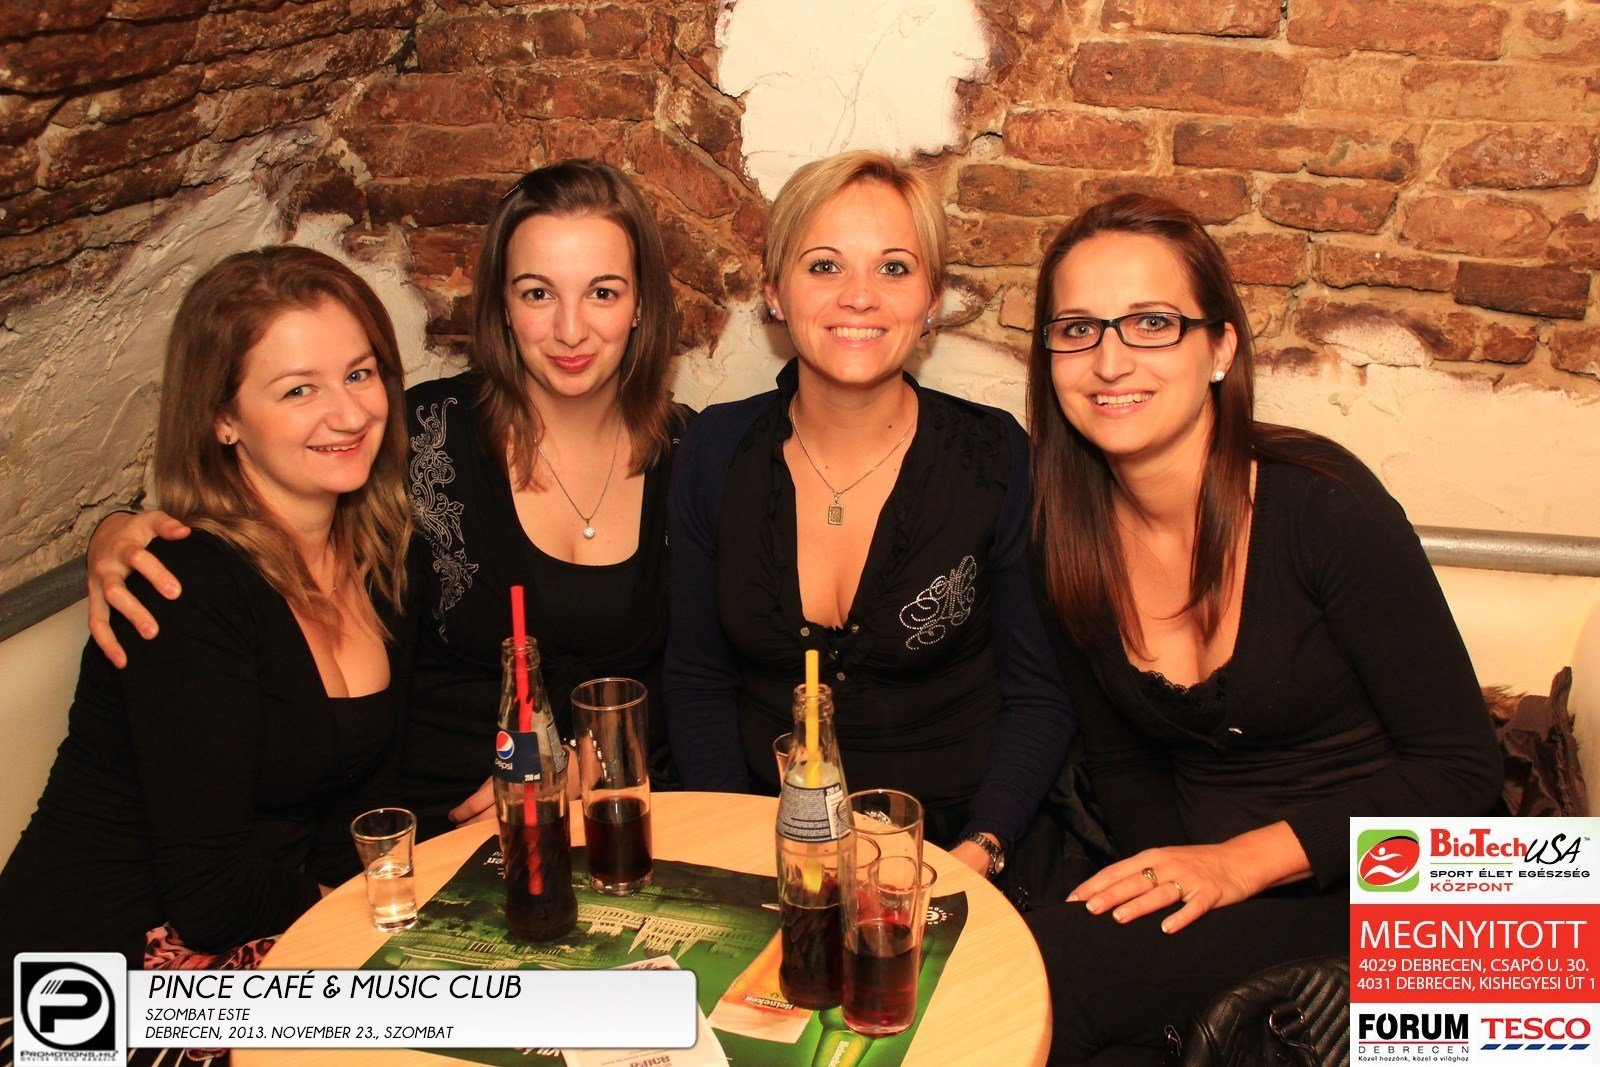 Debrecen, Pince Café & Music Club- 2013. November 23., szombat este